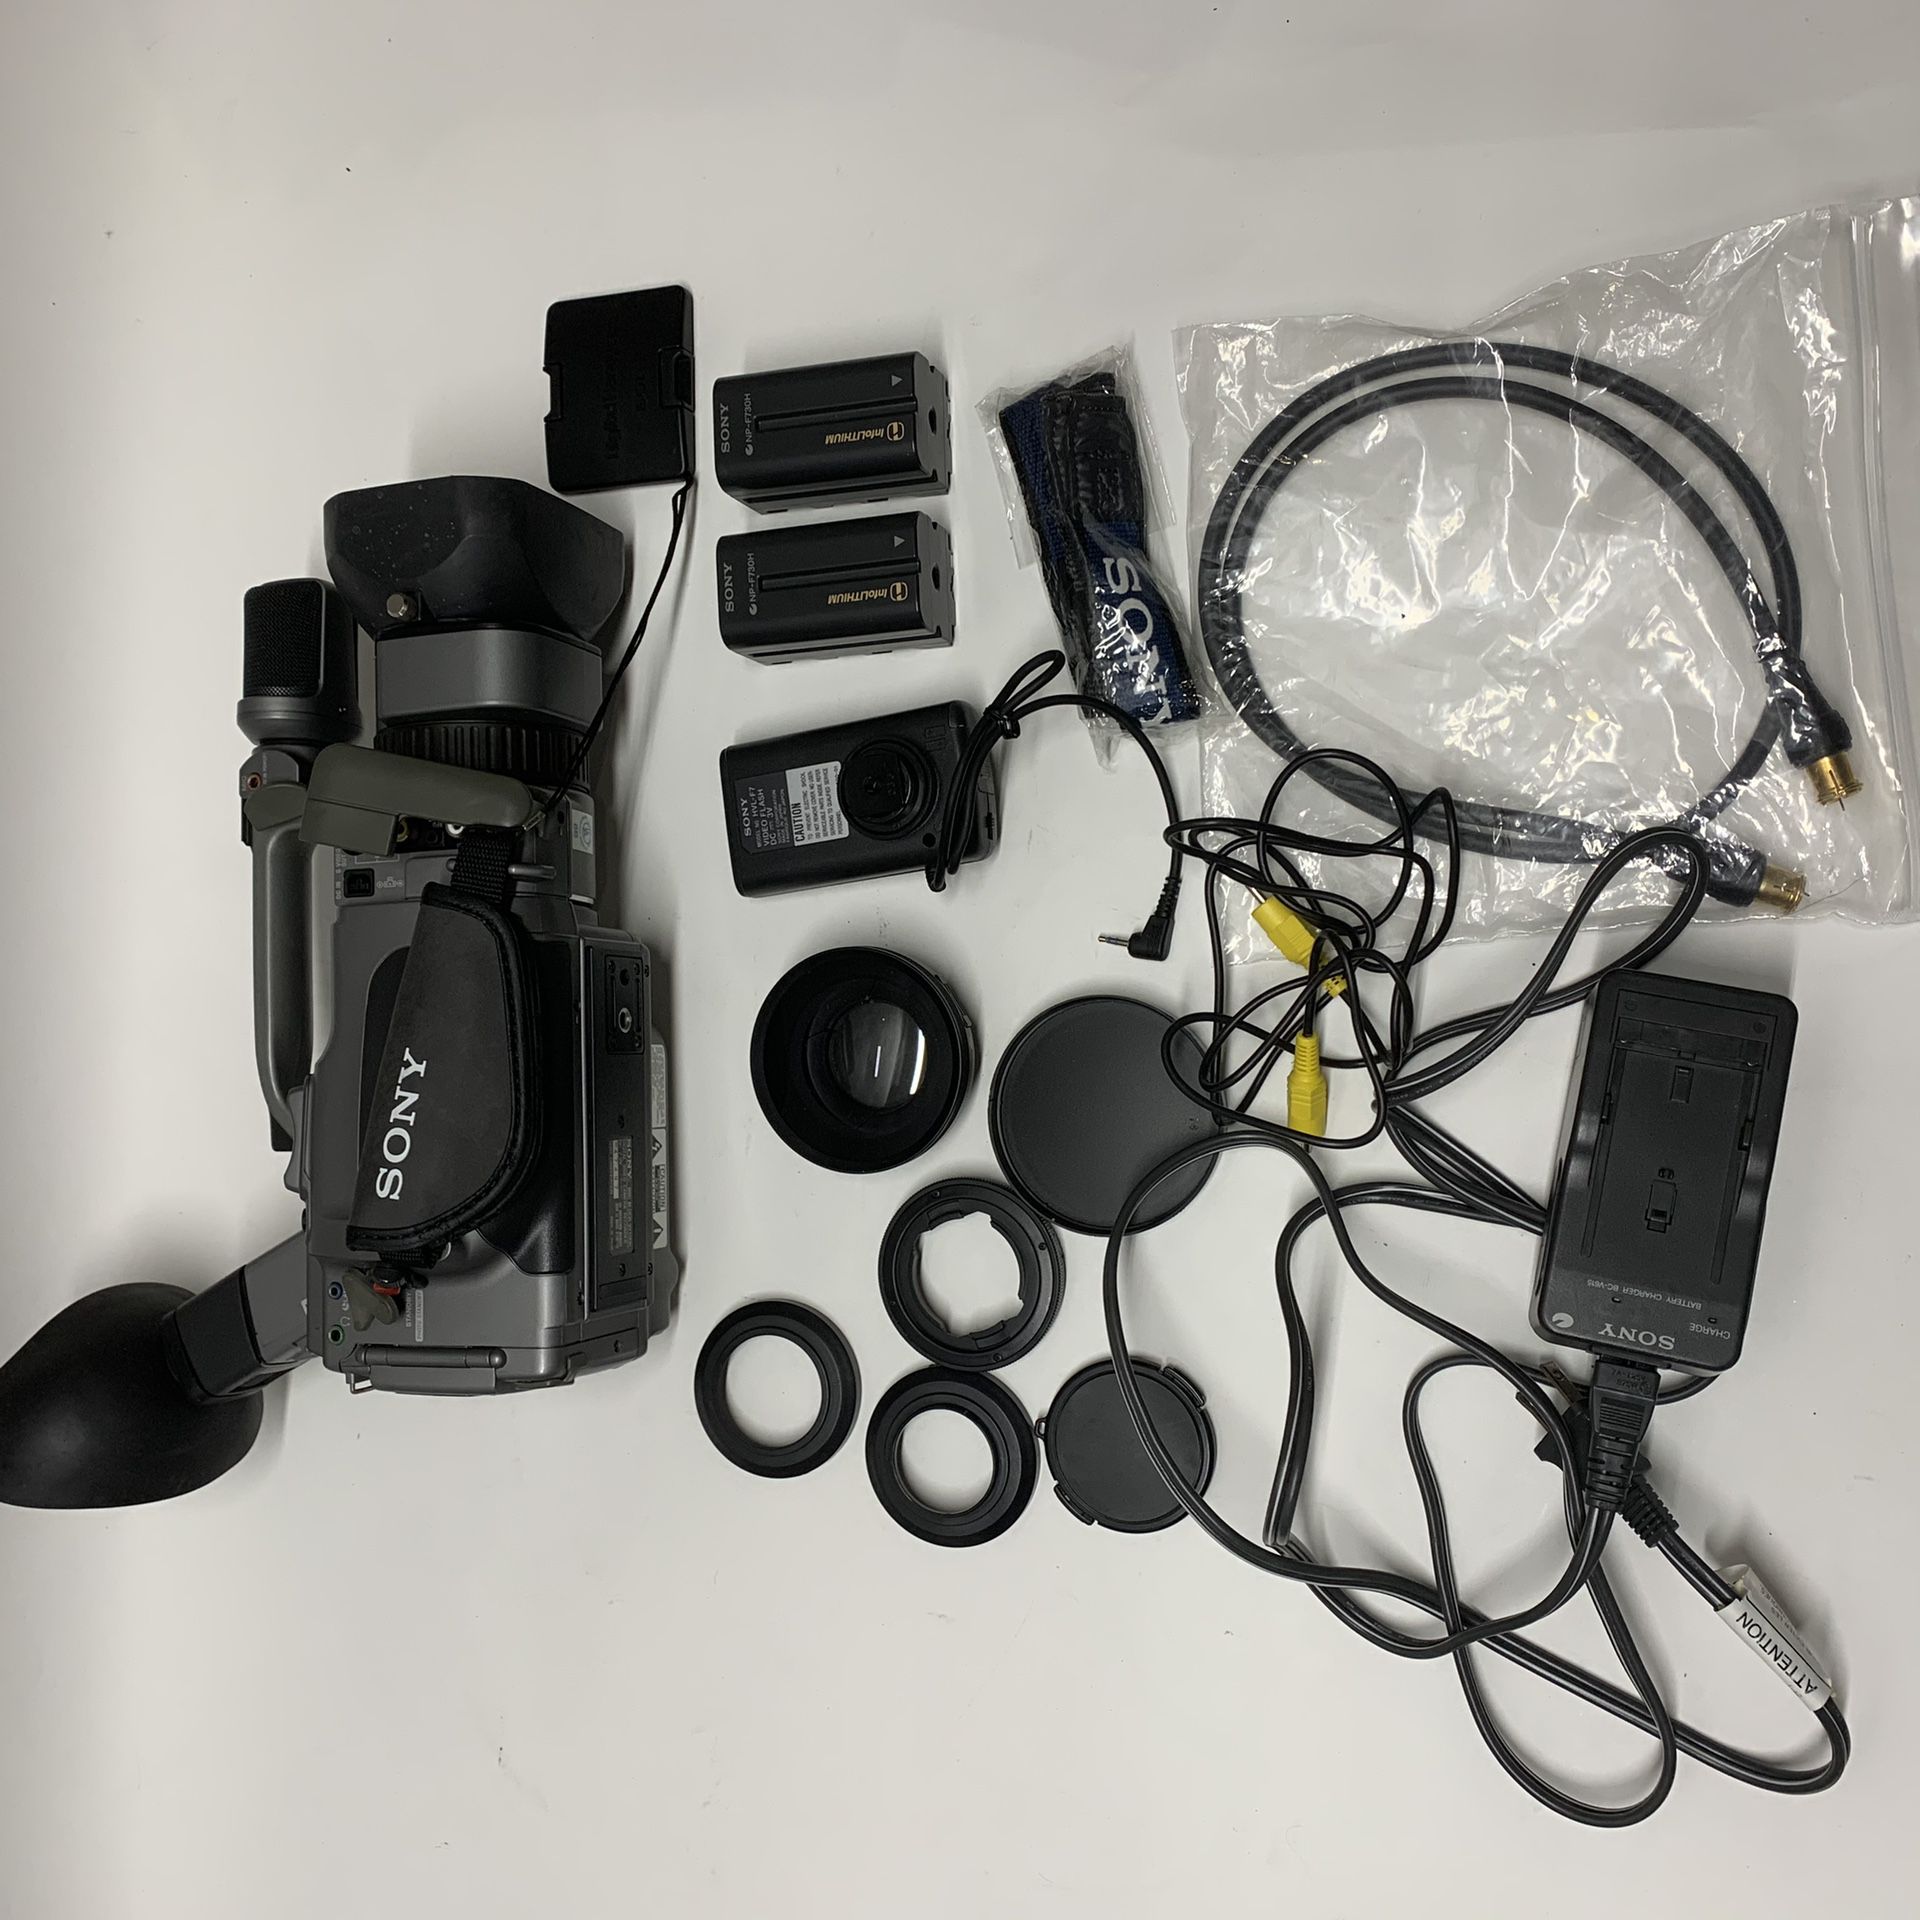 Sony cam corder DCR-VX1000